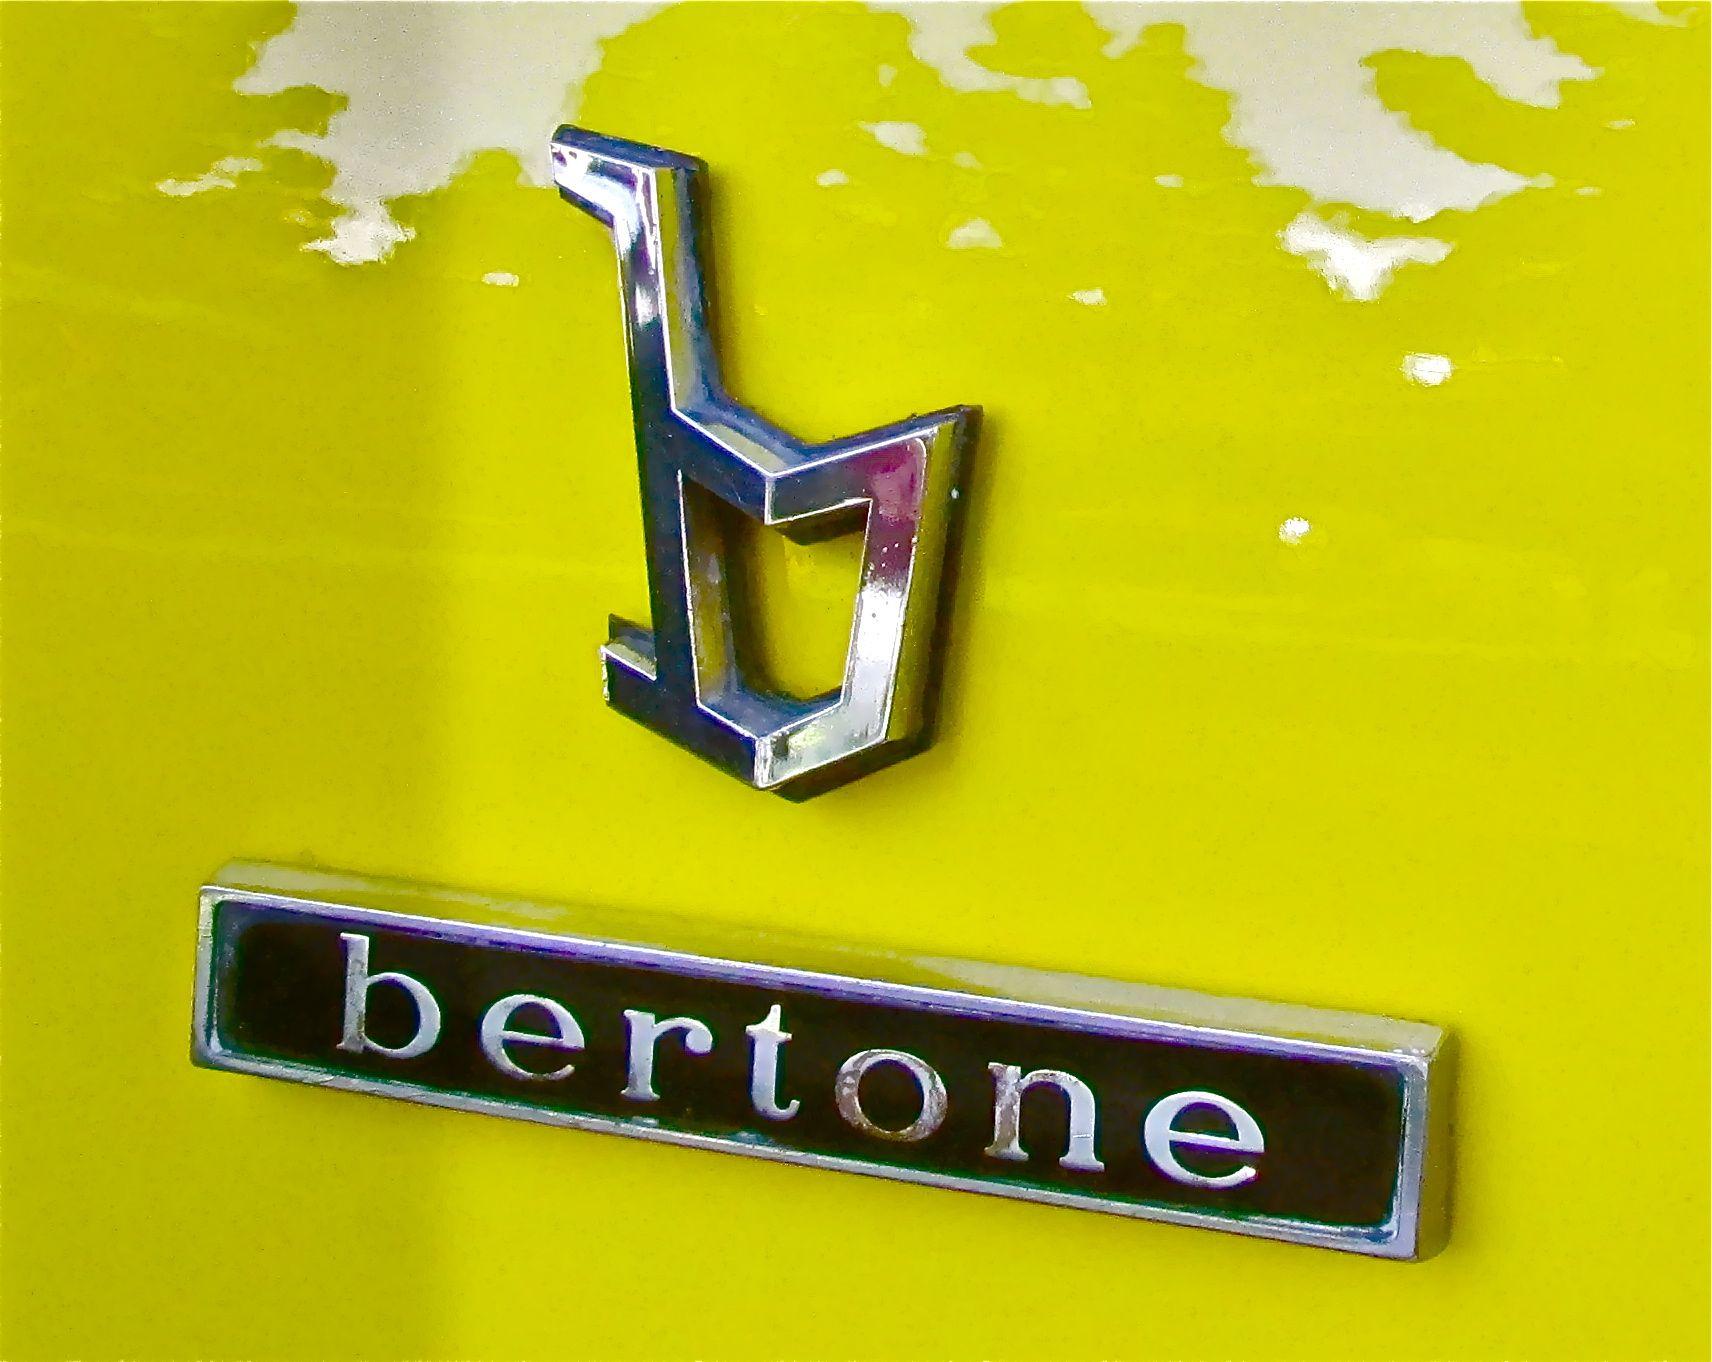 Bertone Car Logo - Bertone designers were a who's who of styling skills